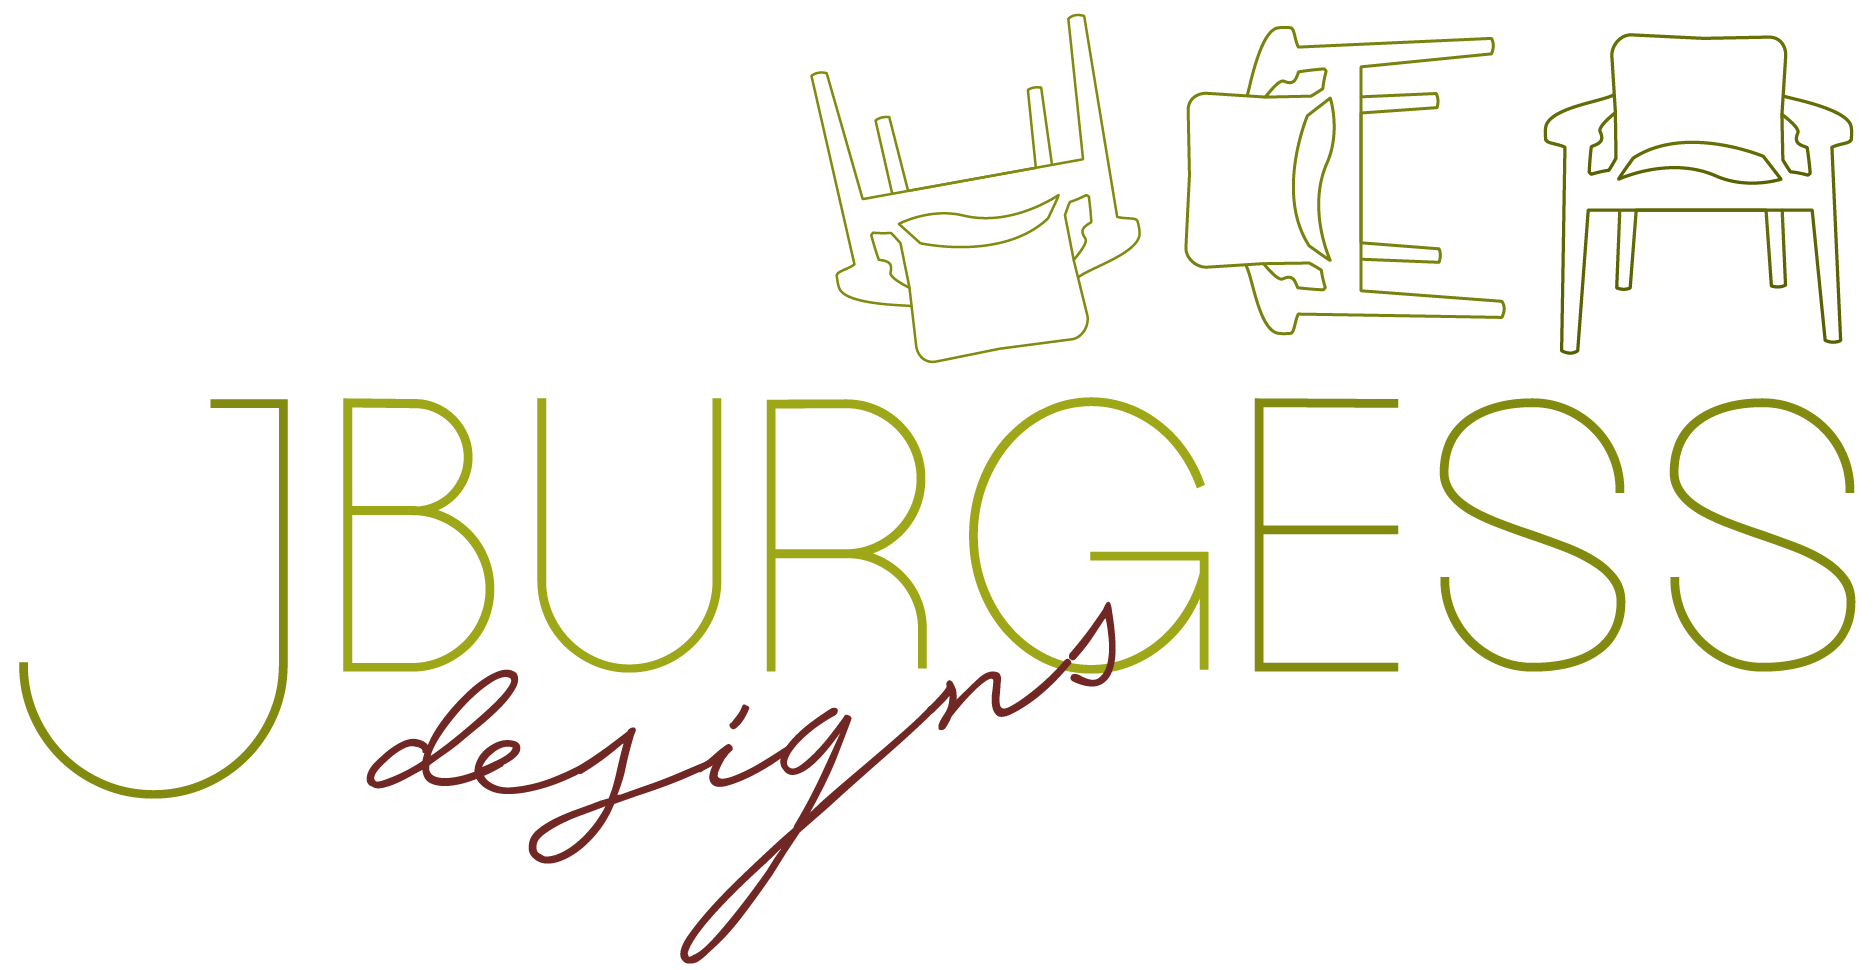 JBurgess Designs